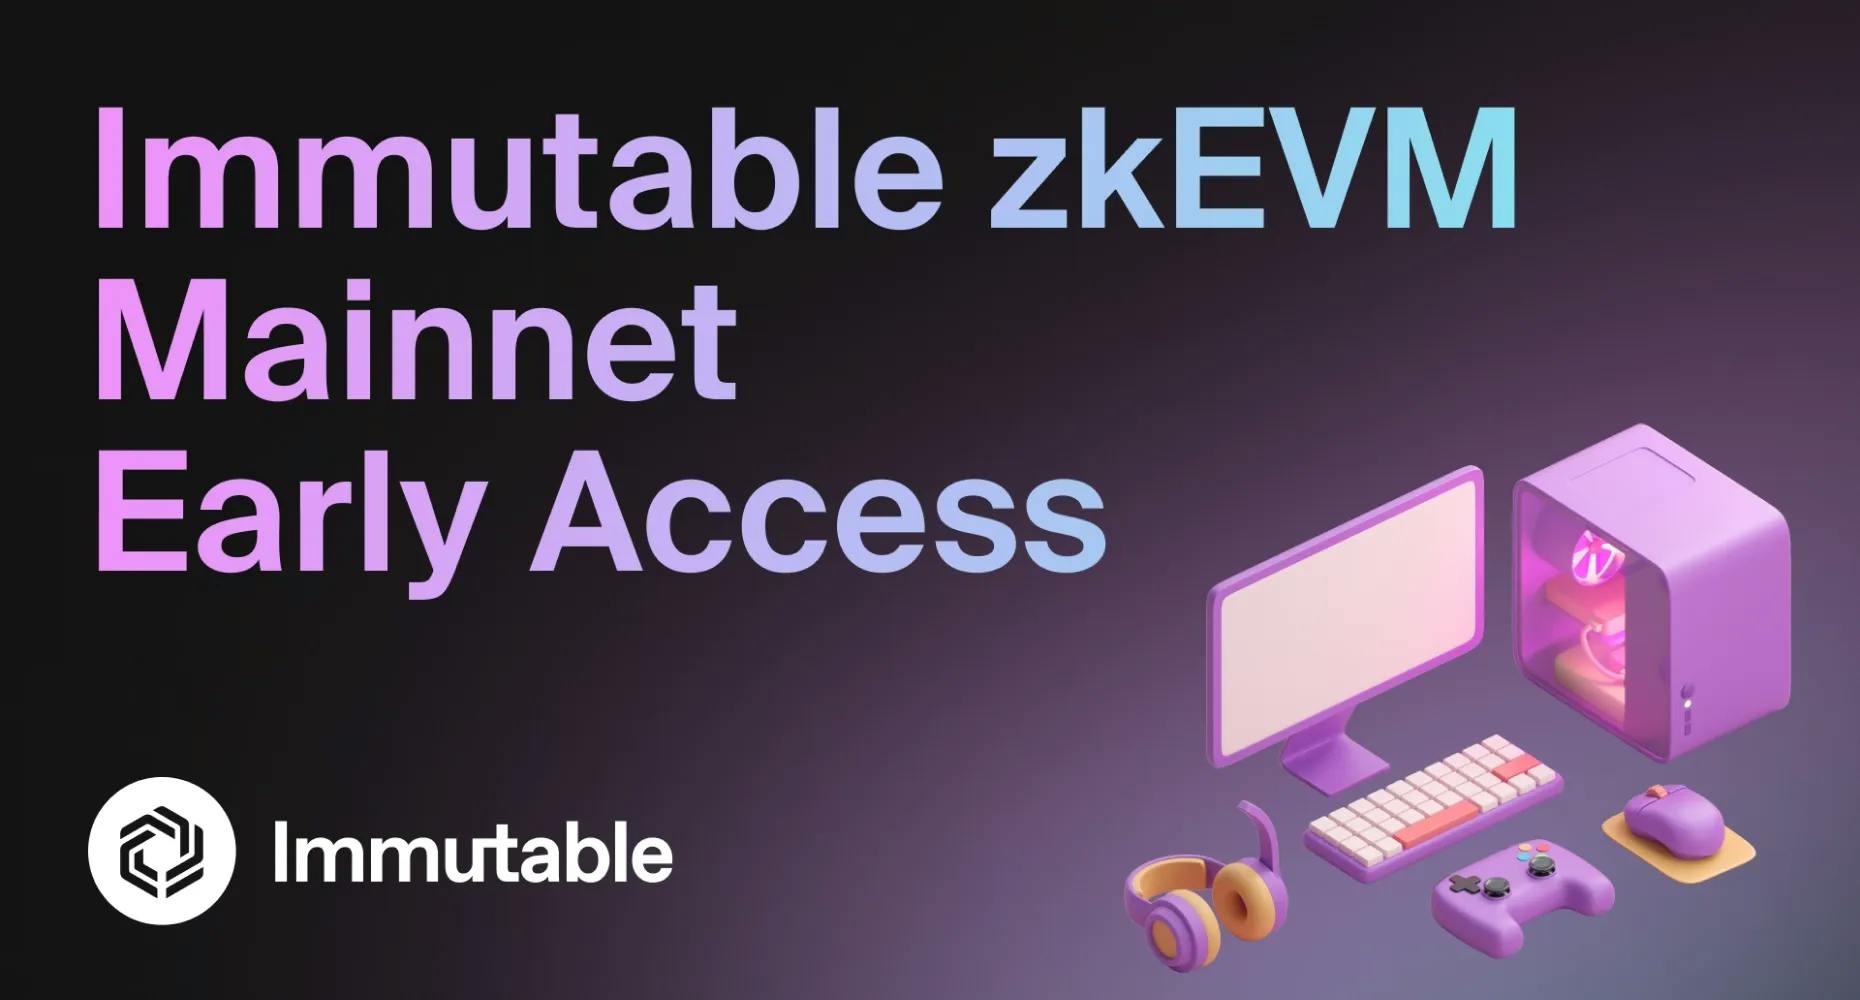 Immutable zkEVM Mainnet Early Access is Live